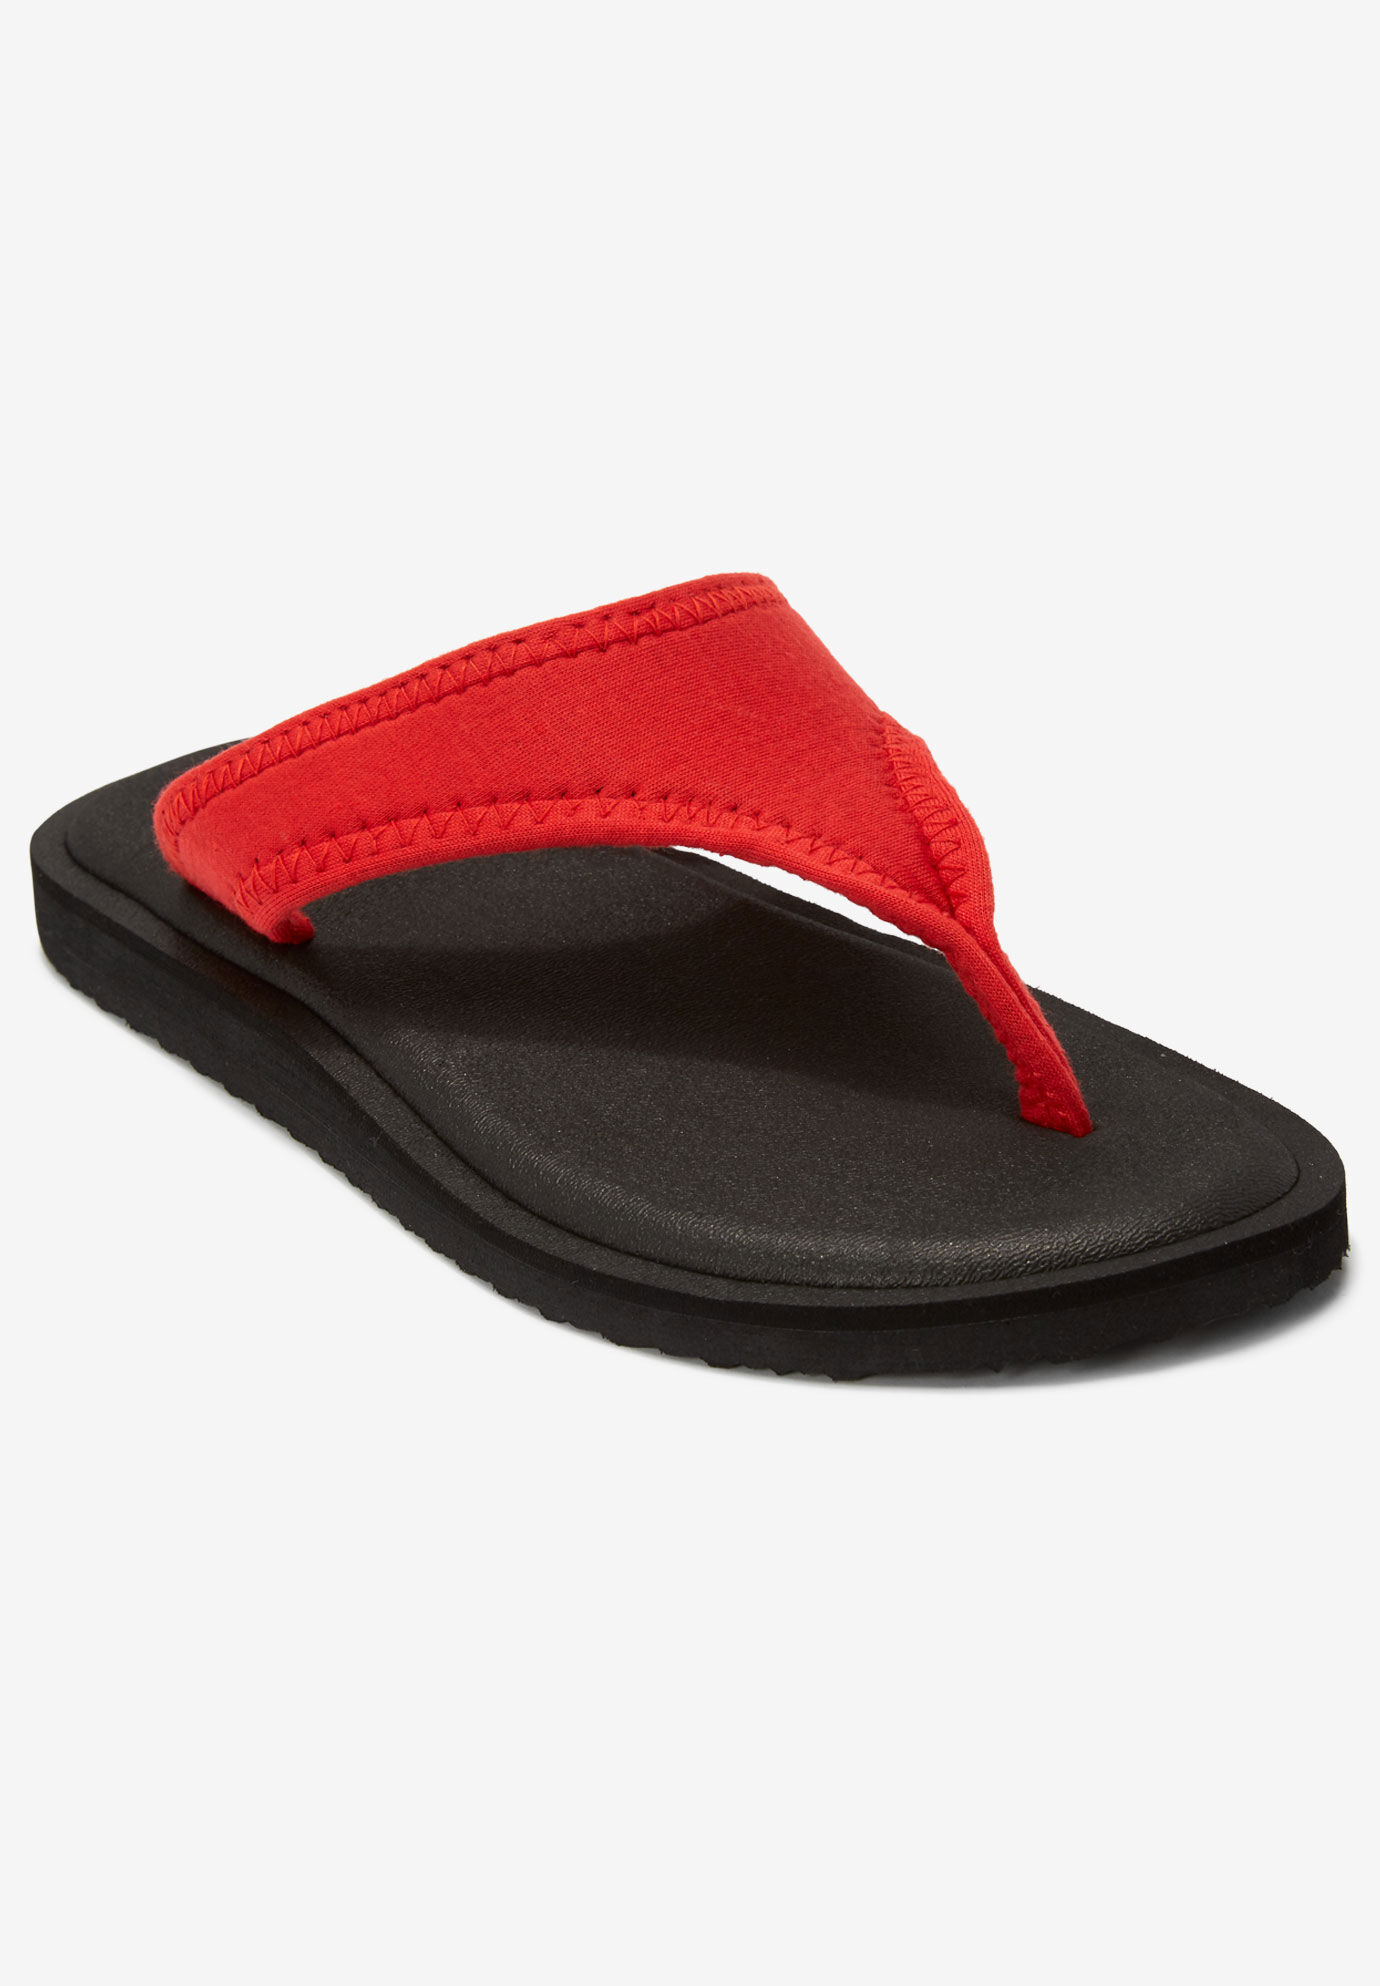 womens wide width sandals